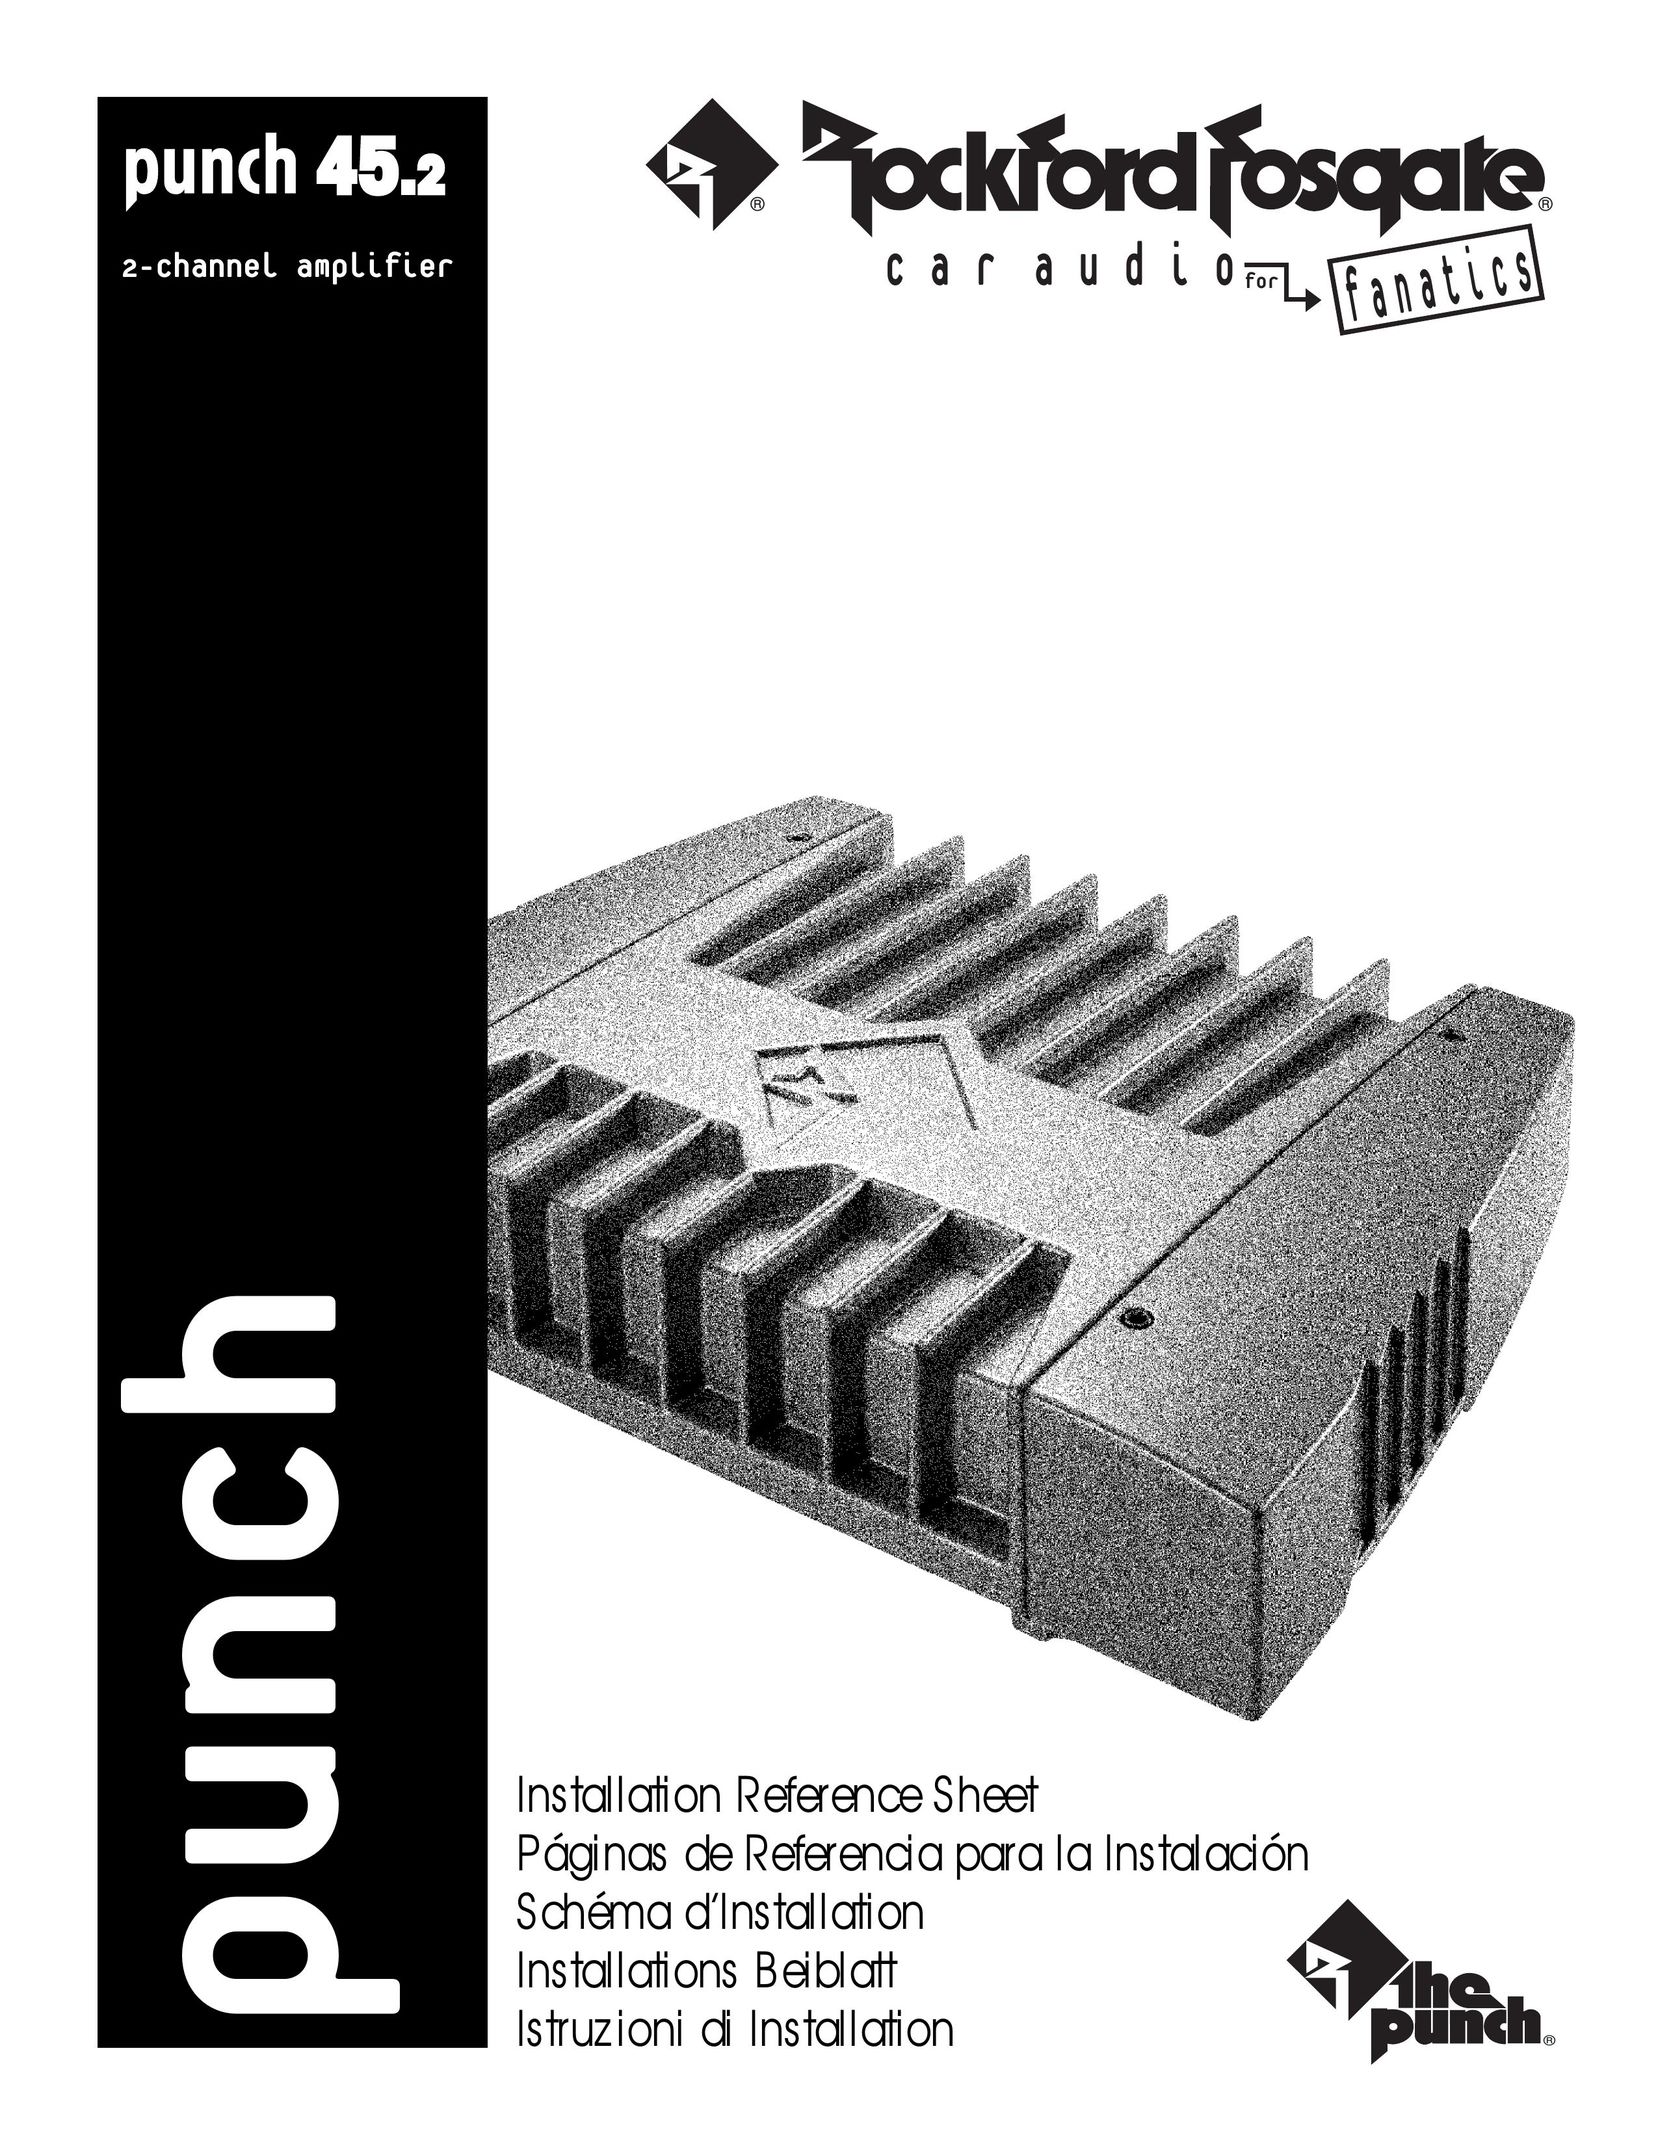 Rockford Fosgate 45.2 Speaker User Manual